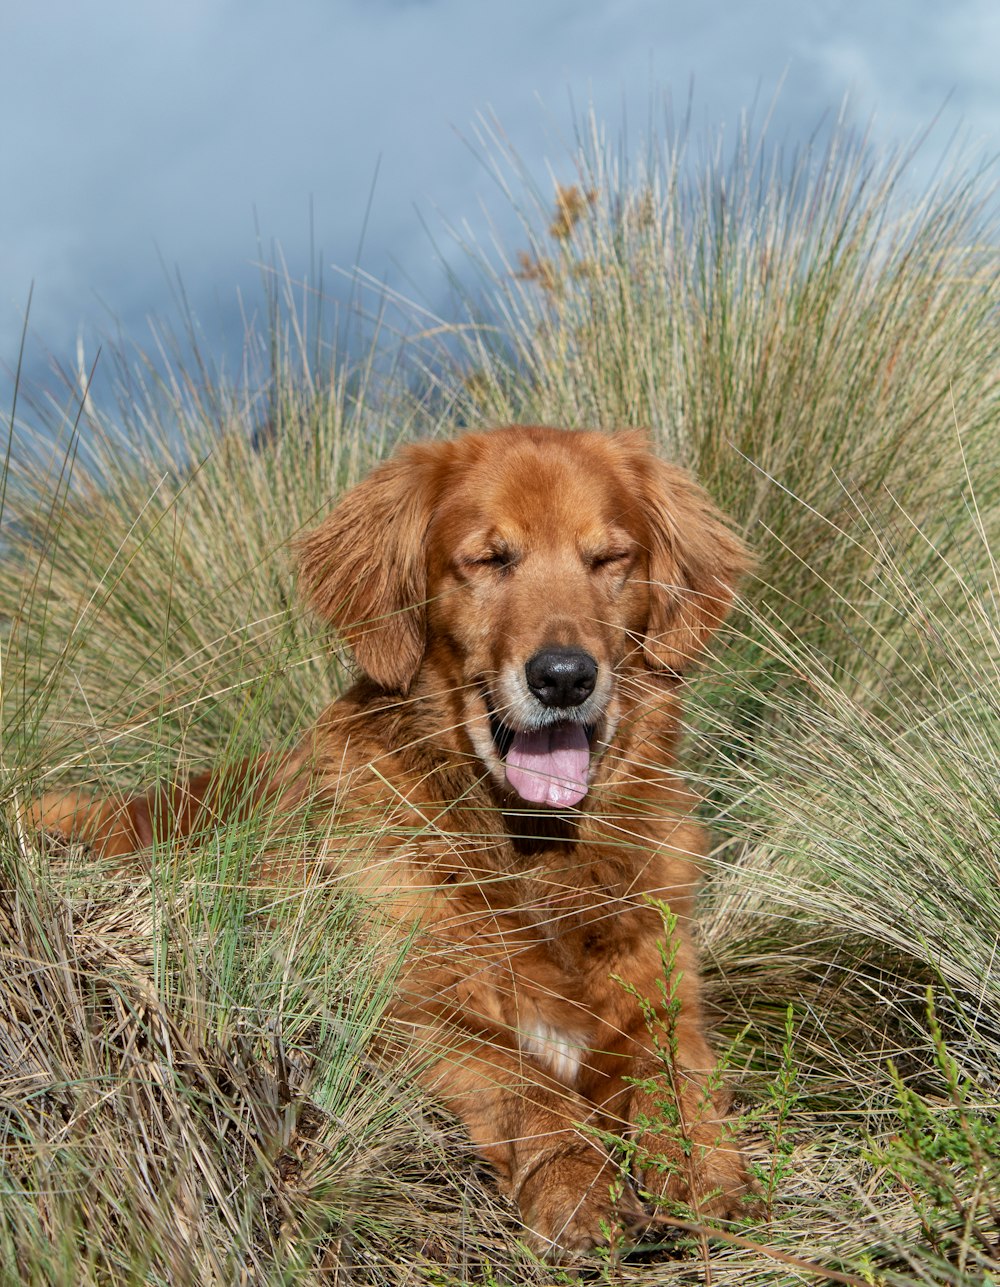 golden retriever puppy on green grass field during daytime